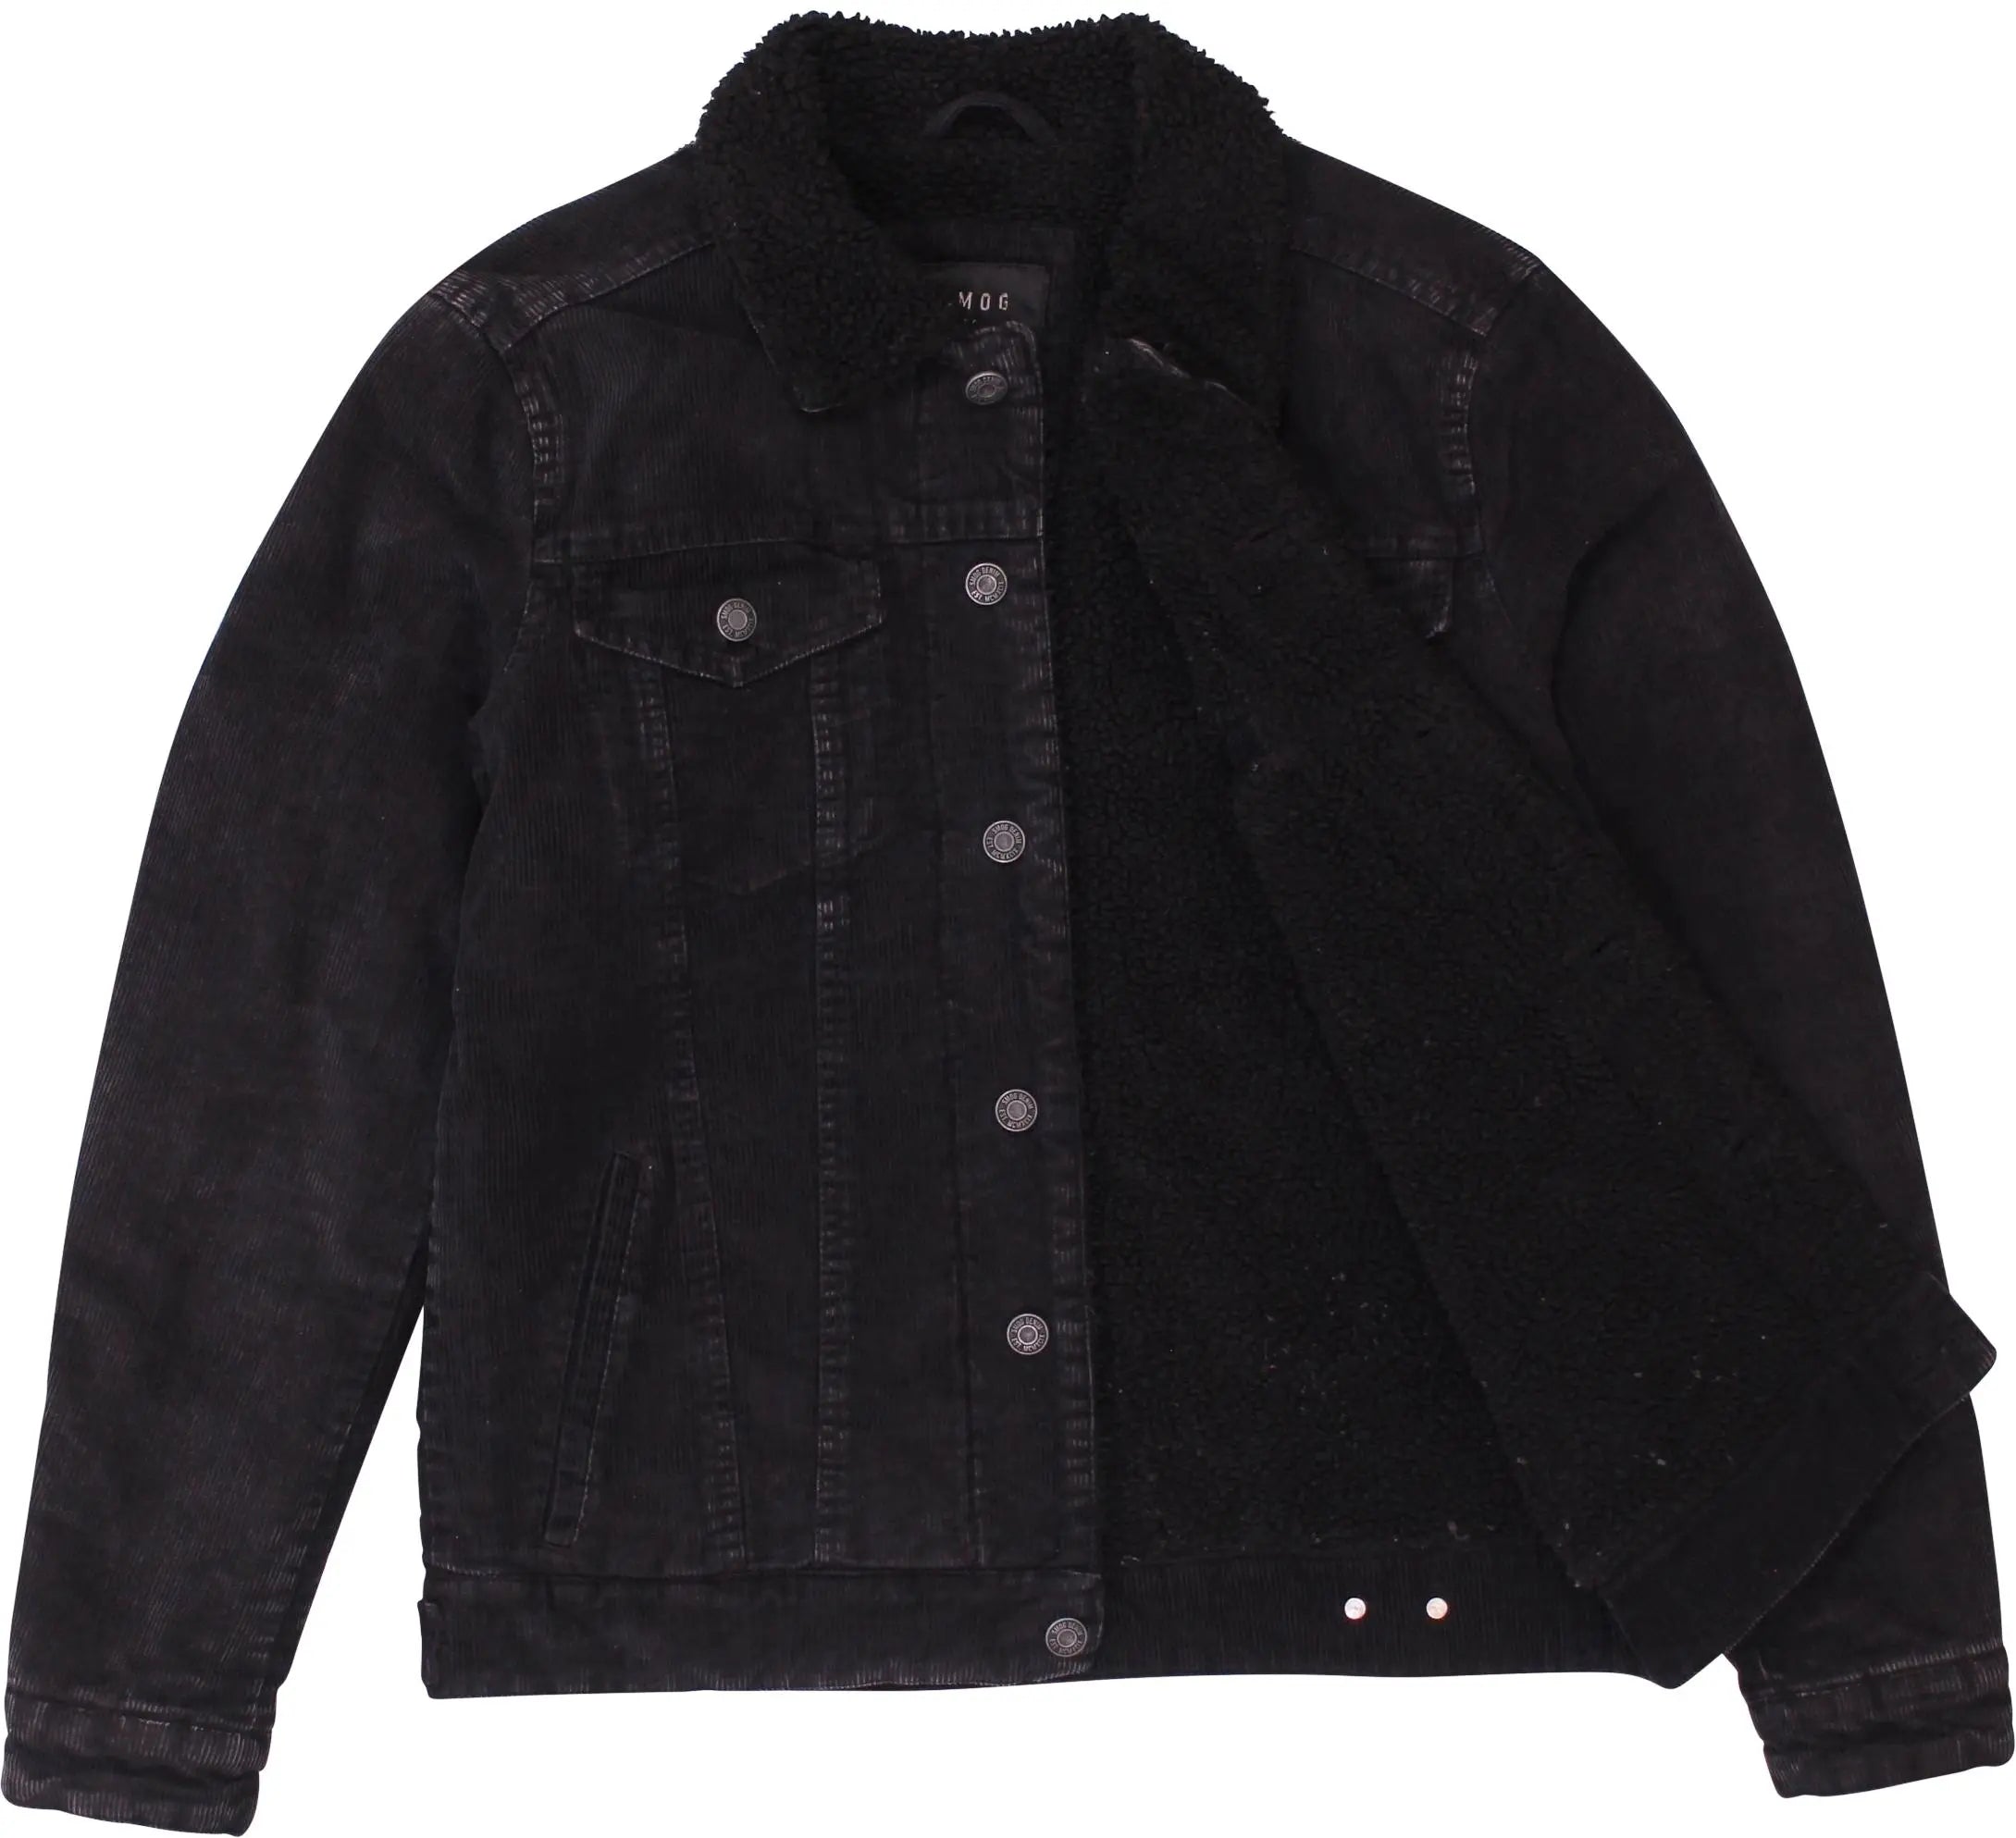 Smog - Black Corduroy Jacket by Smog Denim- ThriftTale.com - Vintage and second handclothing